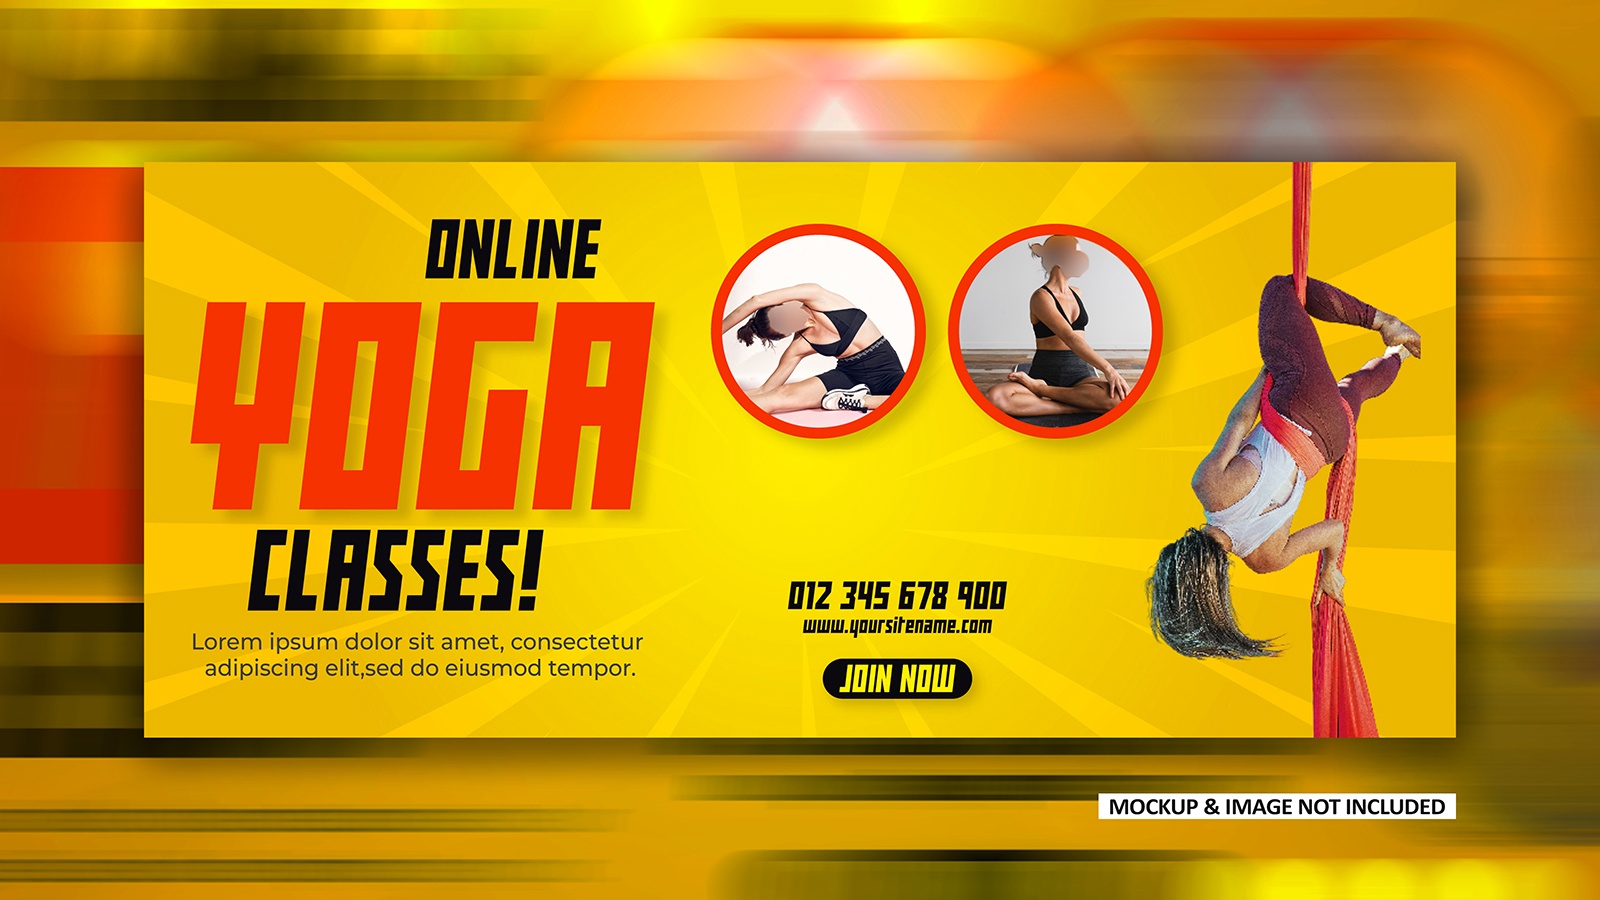 Online fitness promotional social media EPS vector cover banner templates